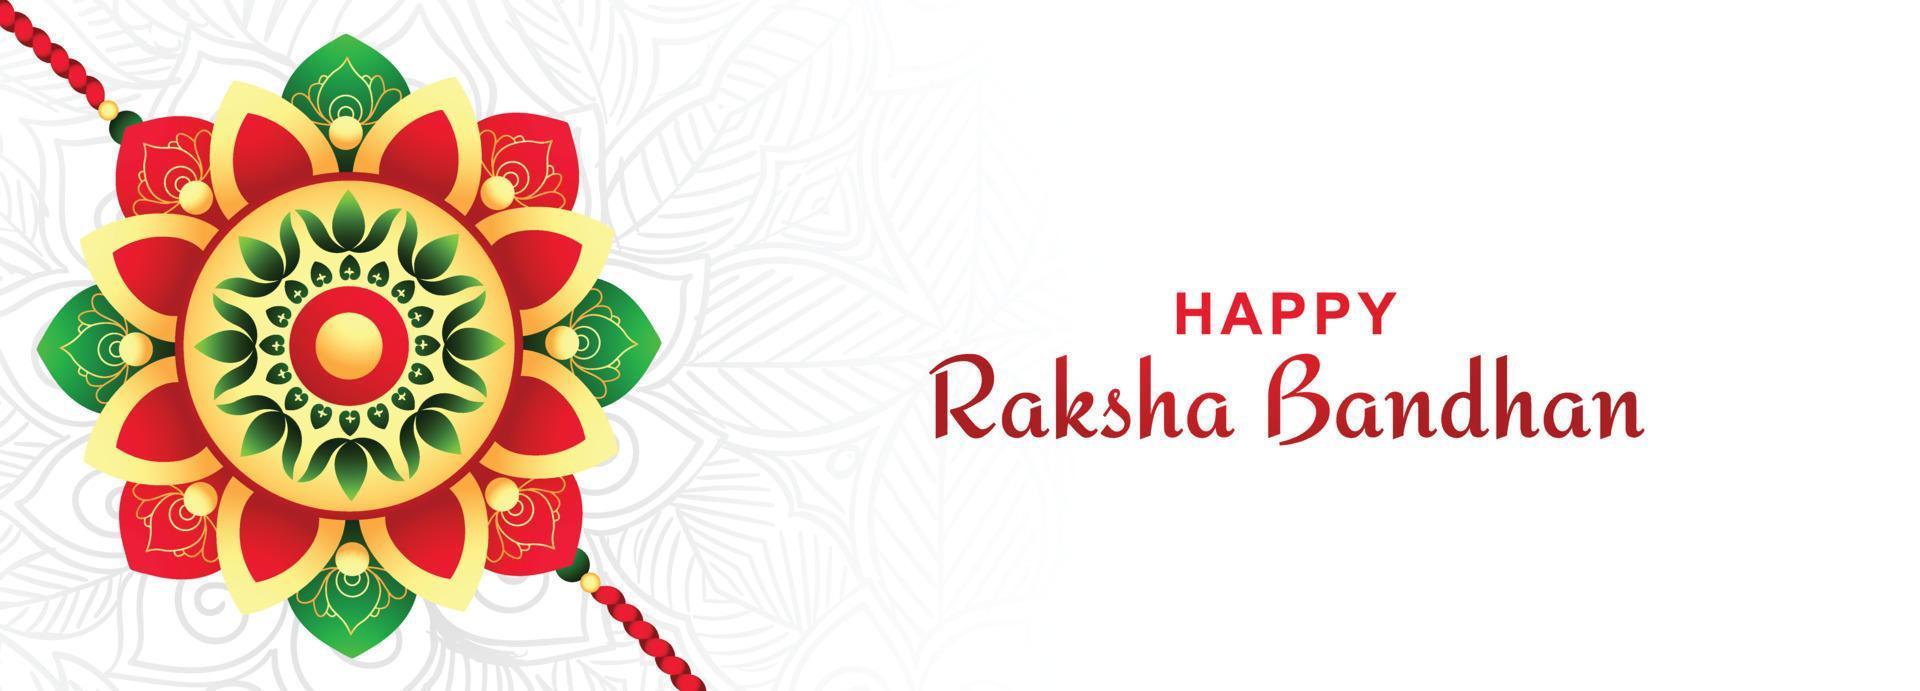 felice raksha bandhan su sfondo decorativo banner festival rakhi vettore